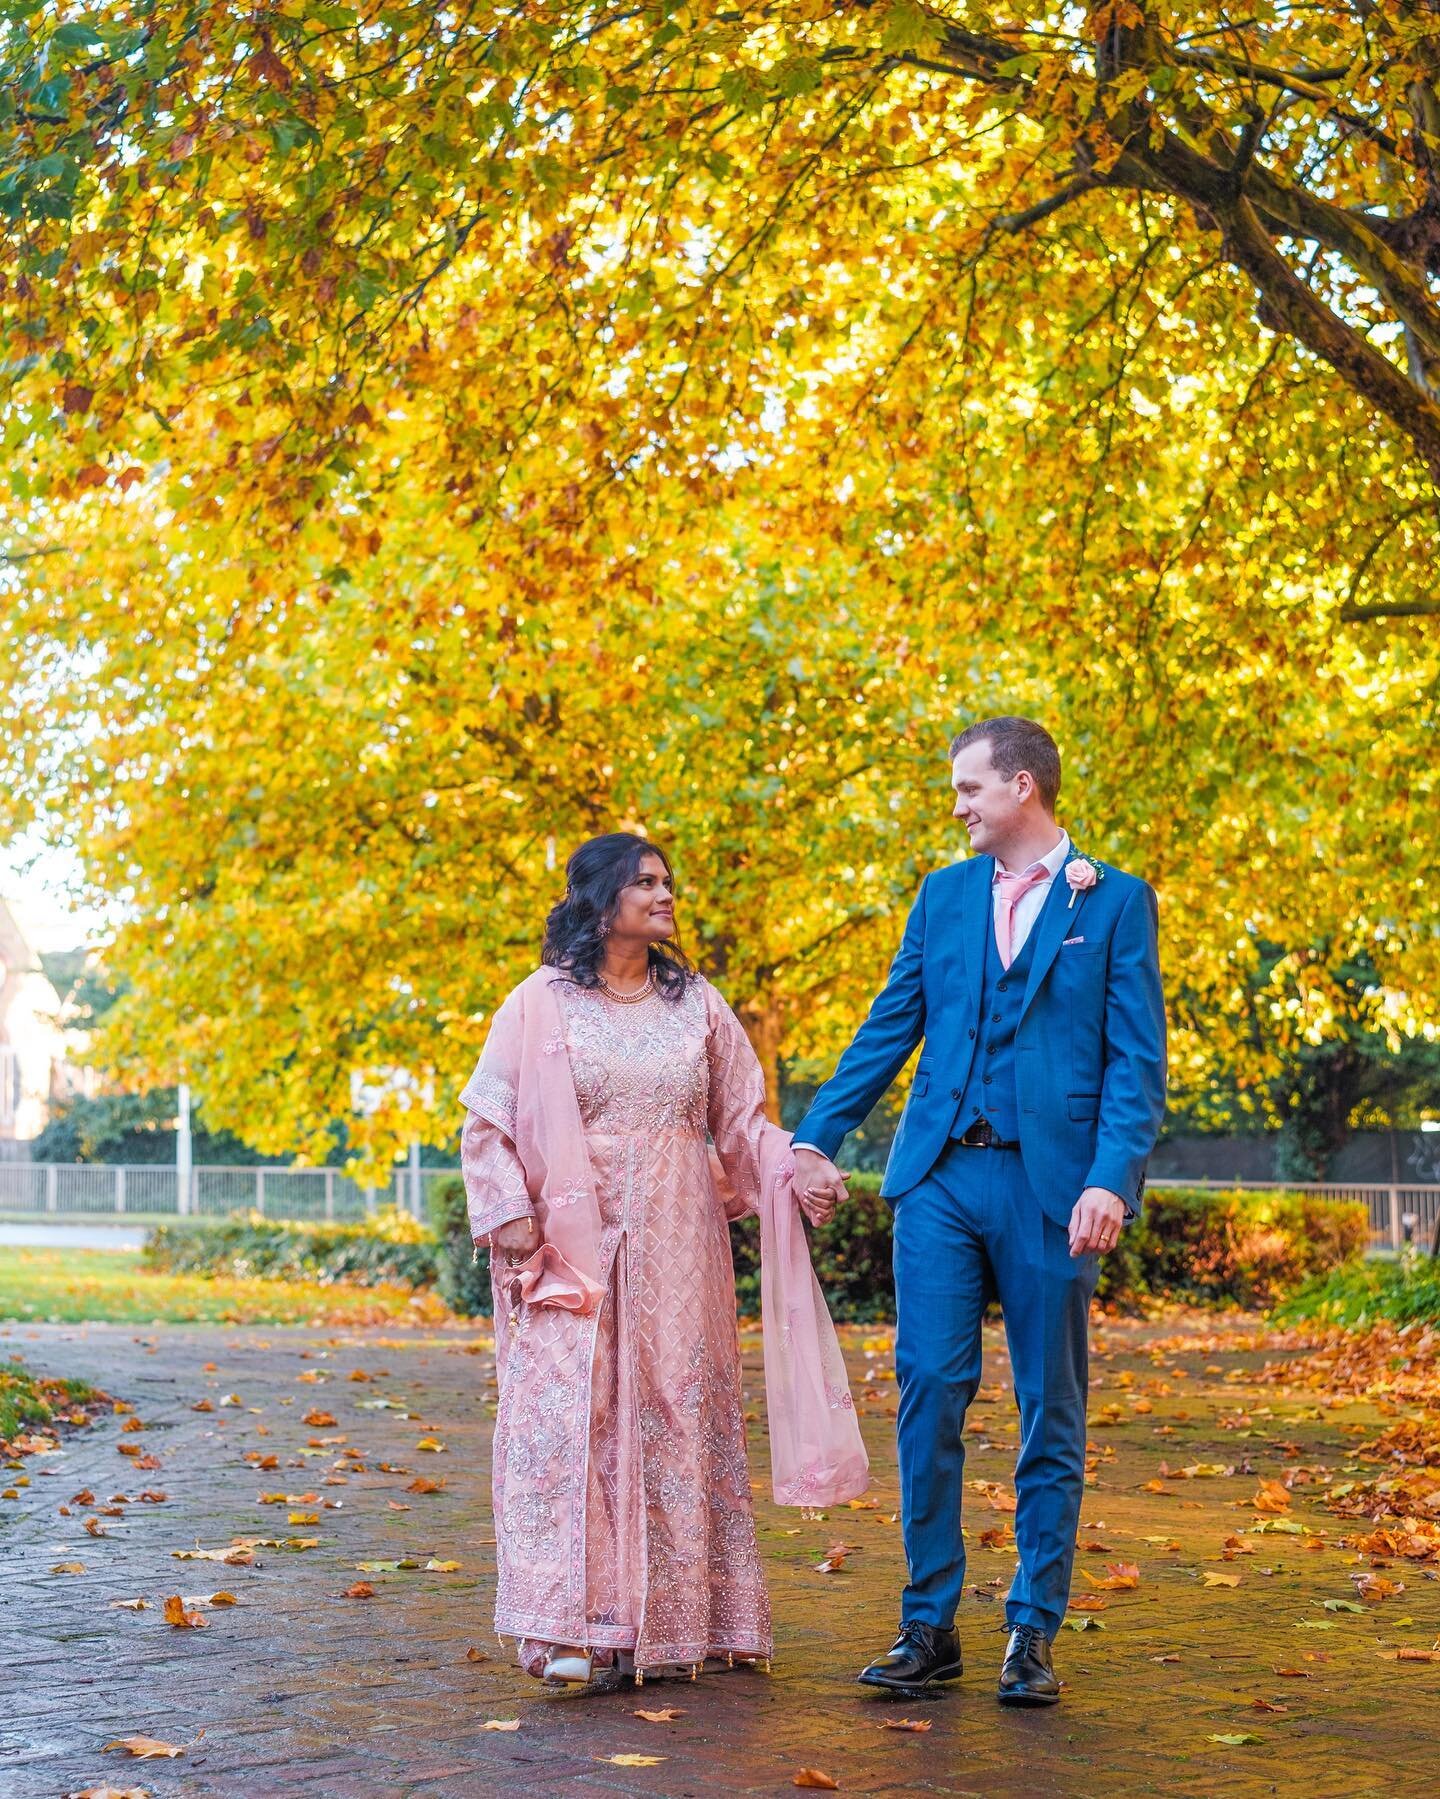 As much I miss Summer I do love Autumn colours.

Here&rsquo;s Christian &amp; Ferdaus from their beautiful wedding in Uxbridge back in October. 

#fujixt4
#fujifilmx_uk
#repostmyfuji
#london
#uxbridge 
#beautifulbride
#weddingday
#weddinginspo
#weddi